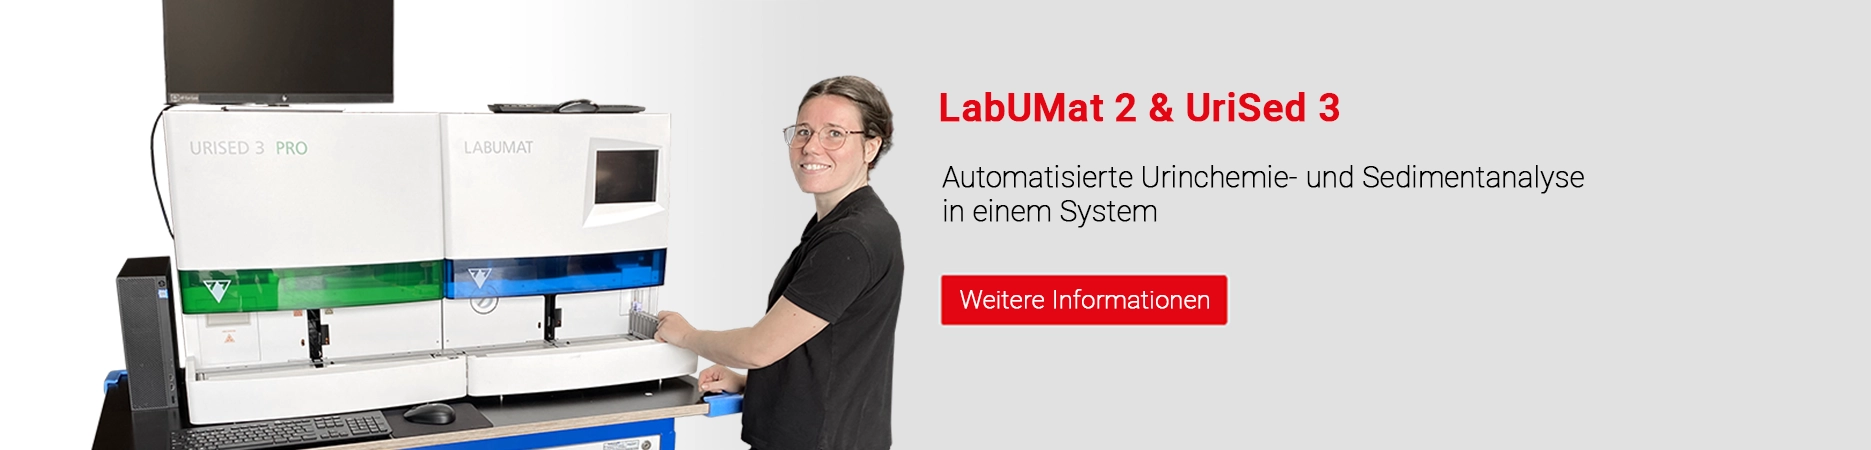 LabUMat 2 & UriSed 3: Automatisierte Urinchemie